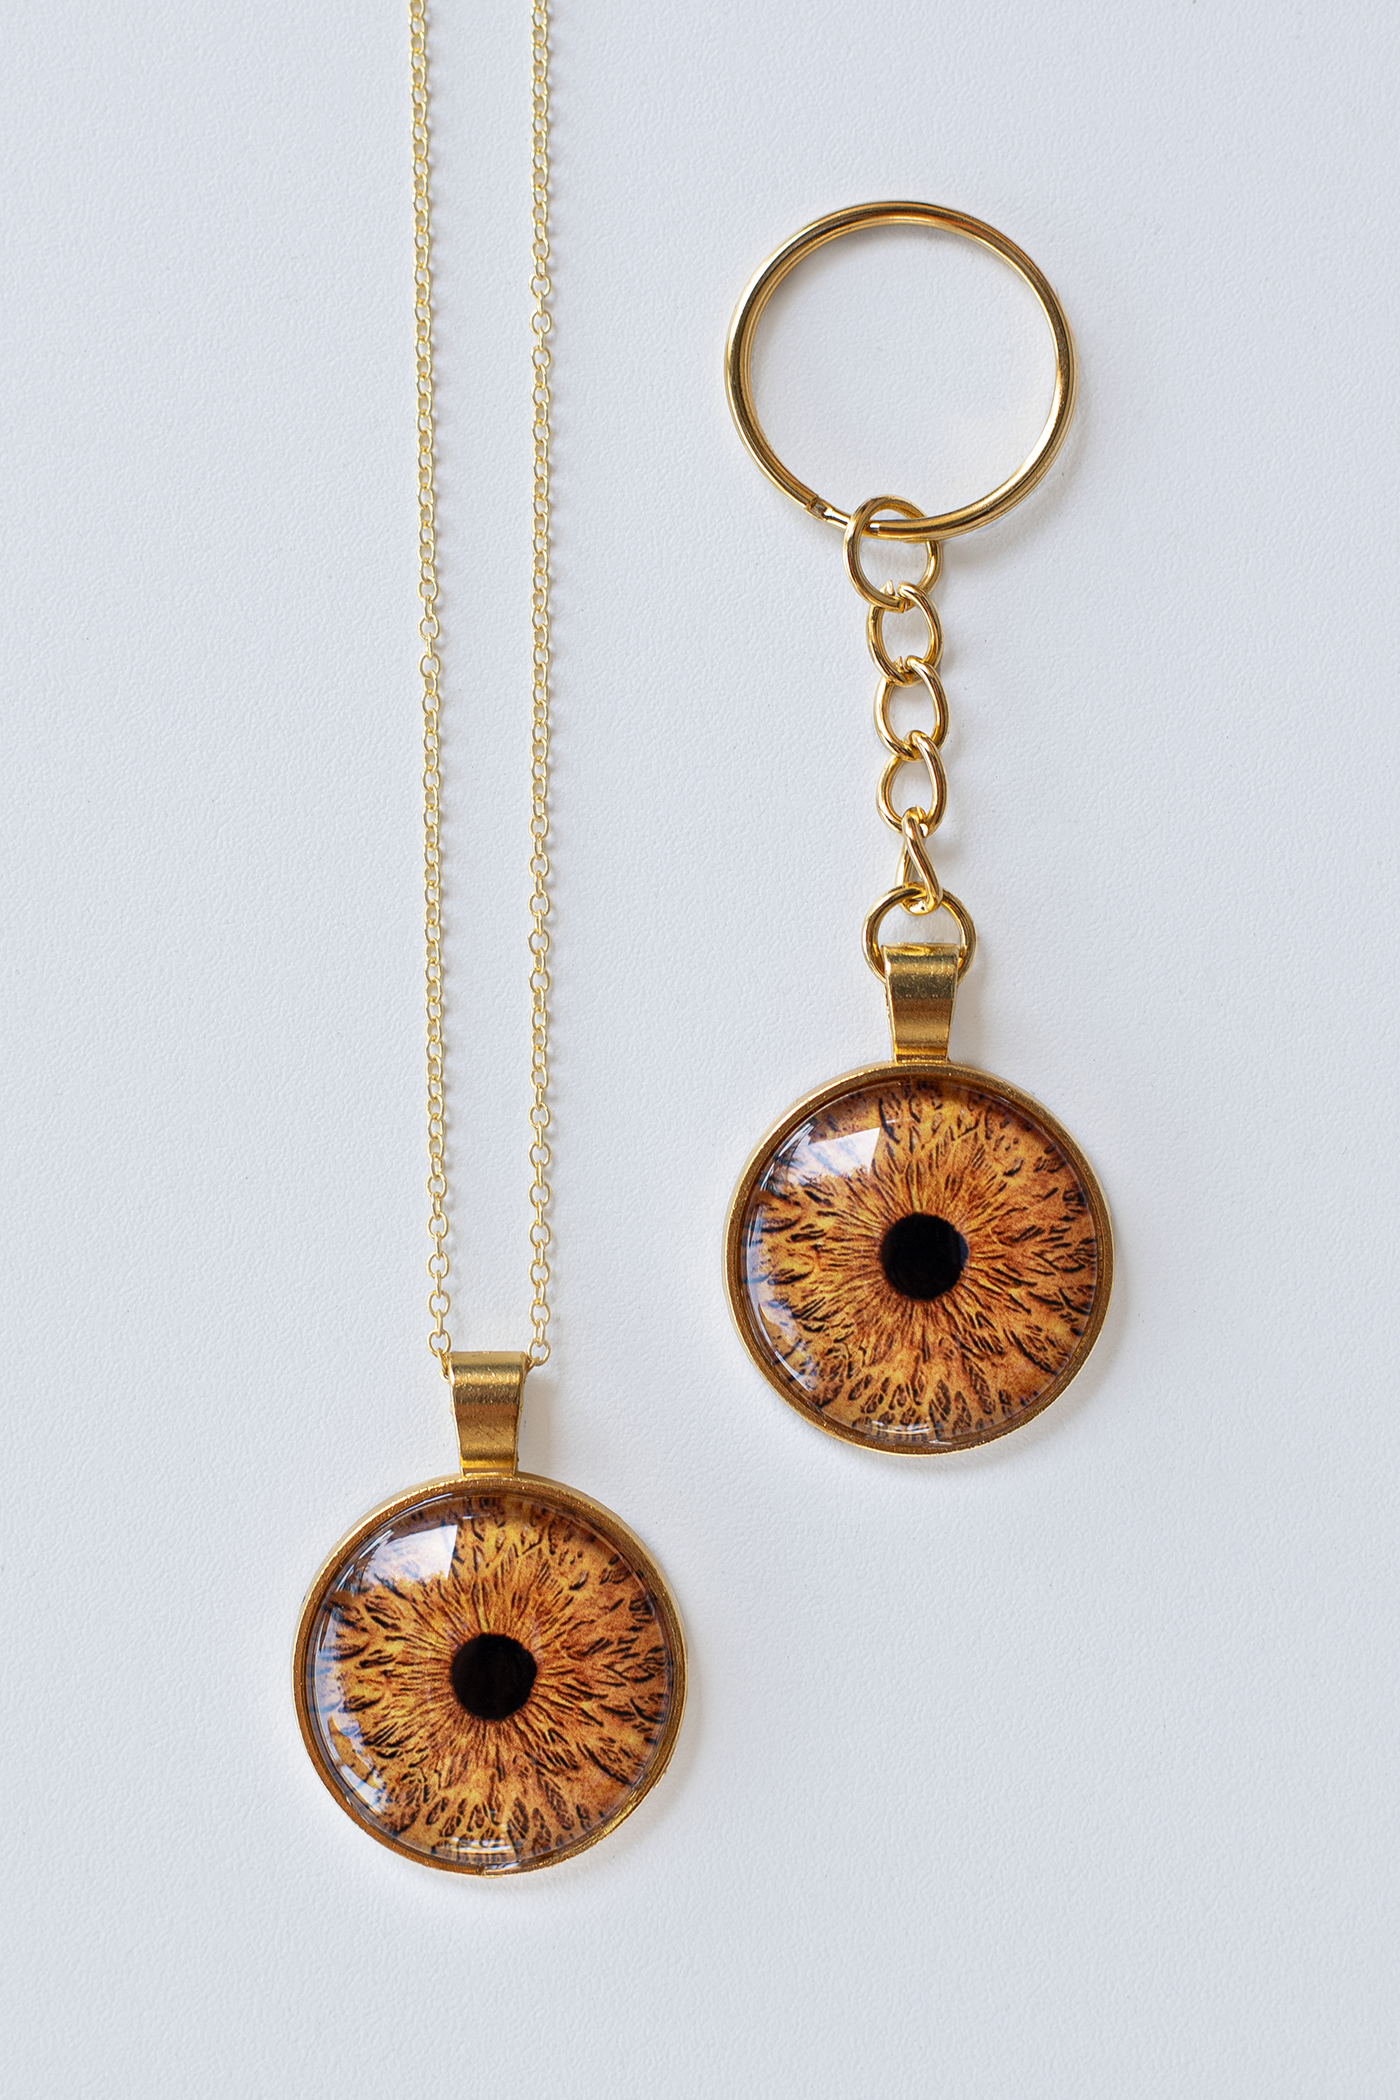 Iris Keychain and Iris Necklace